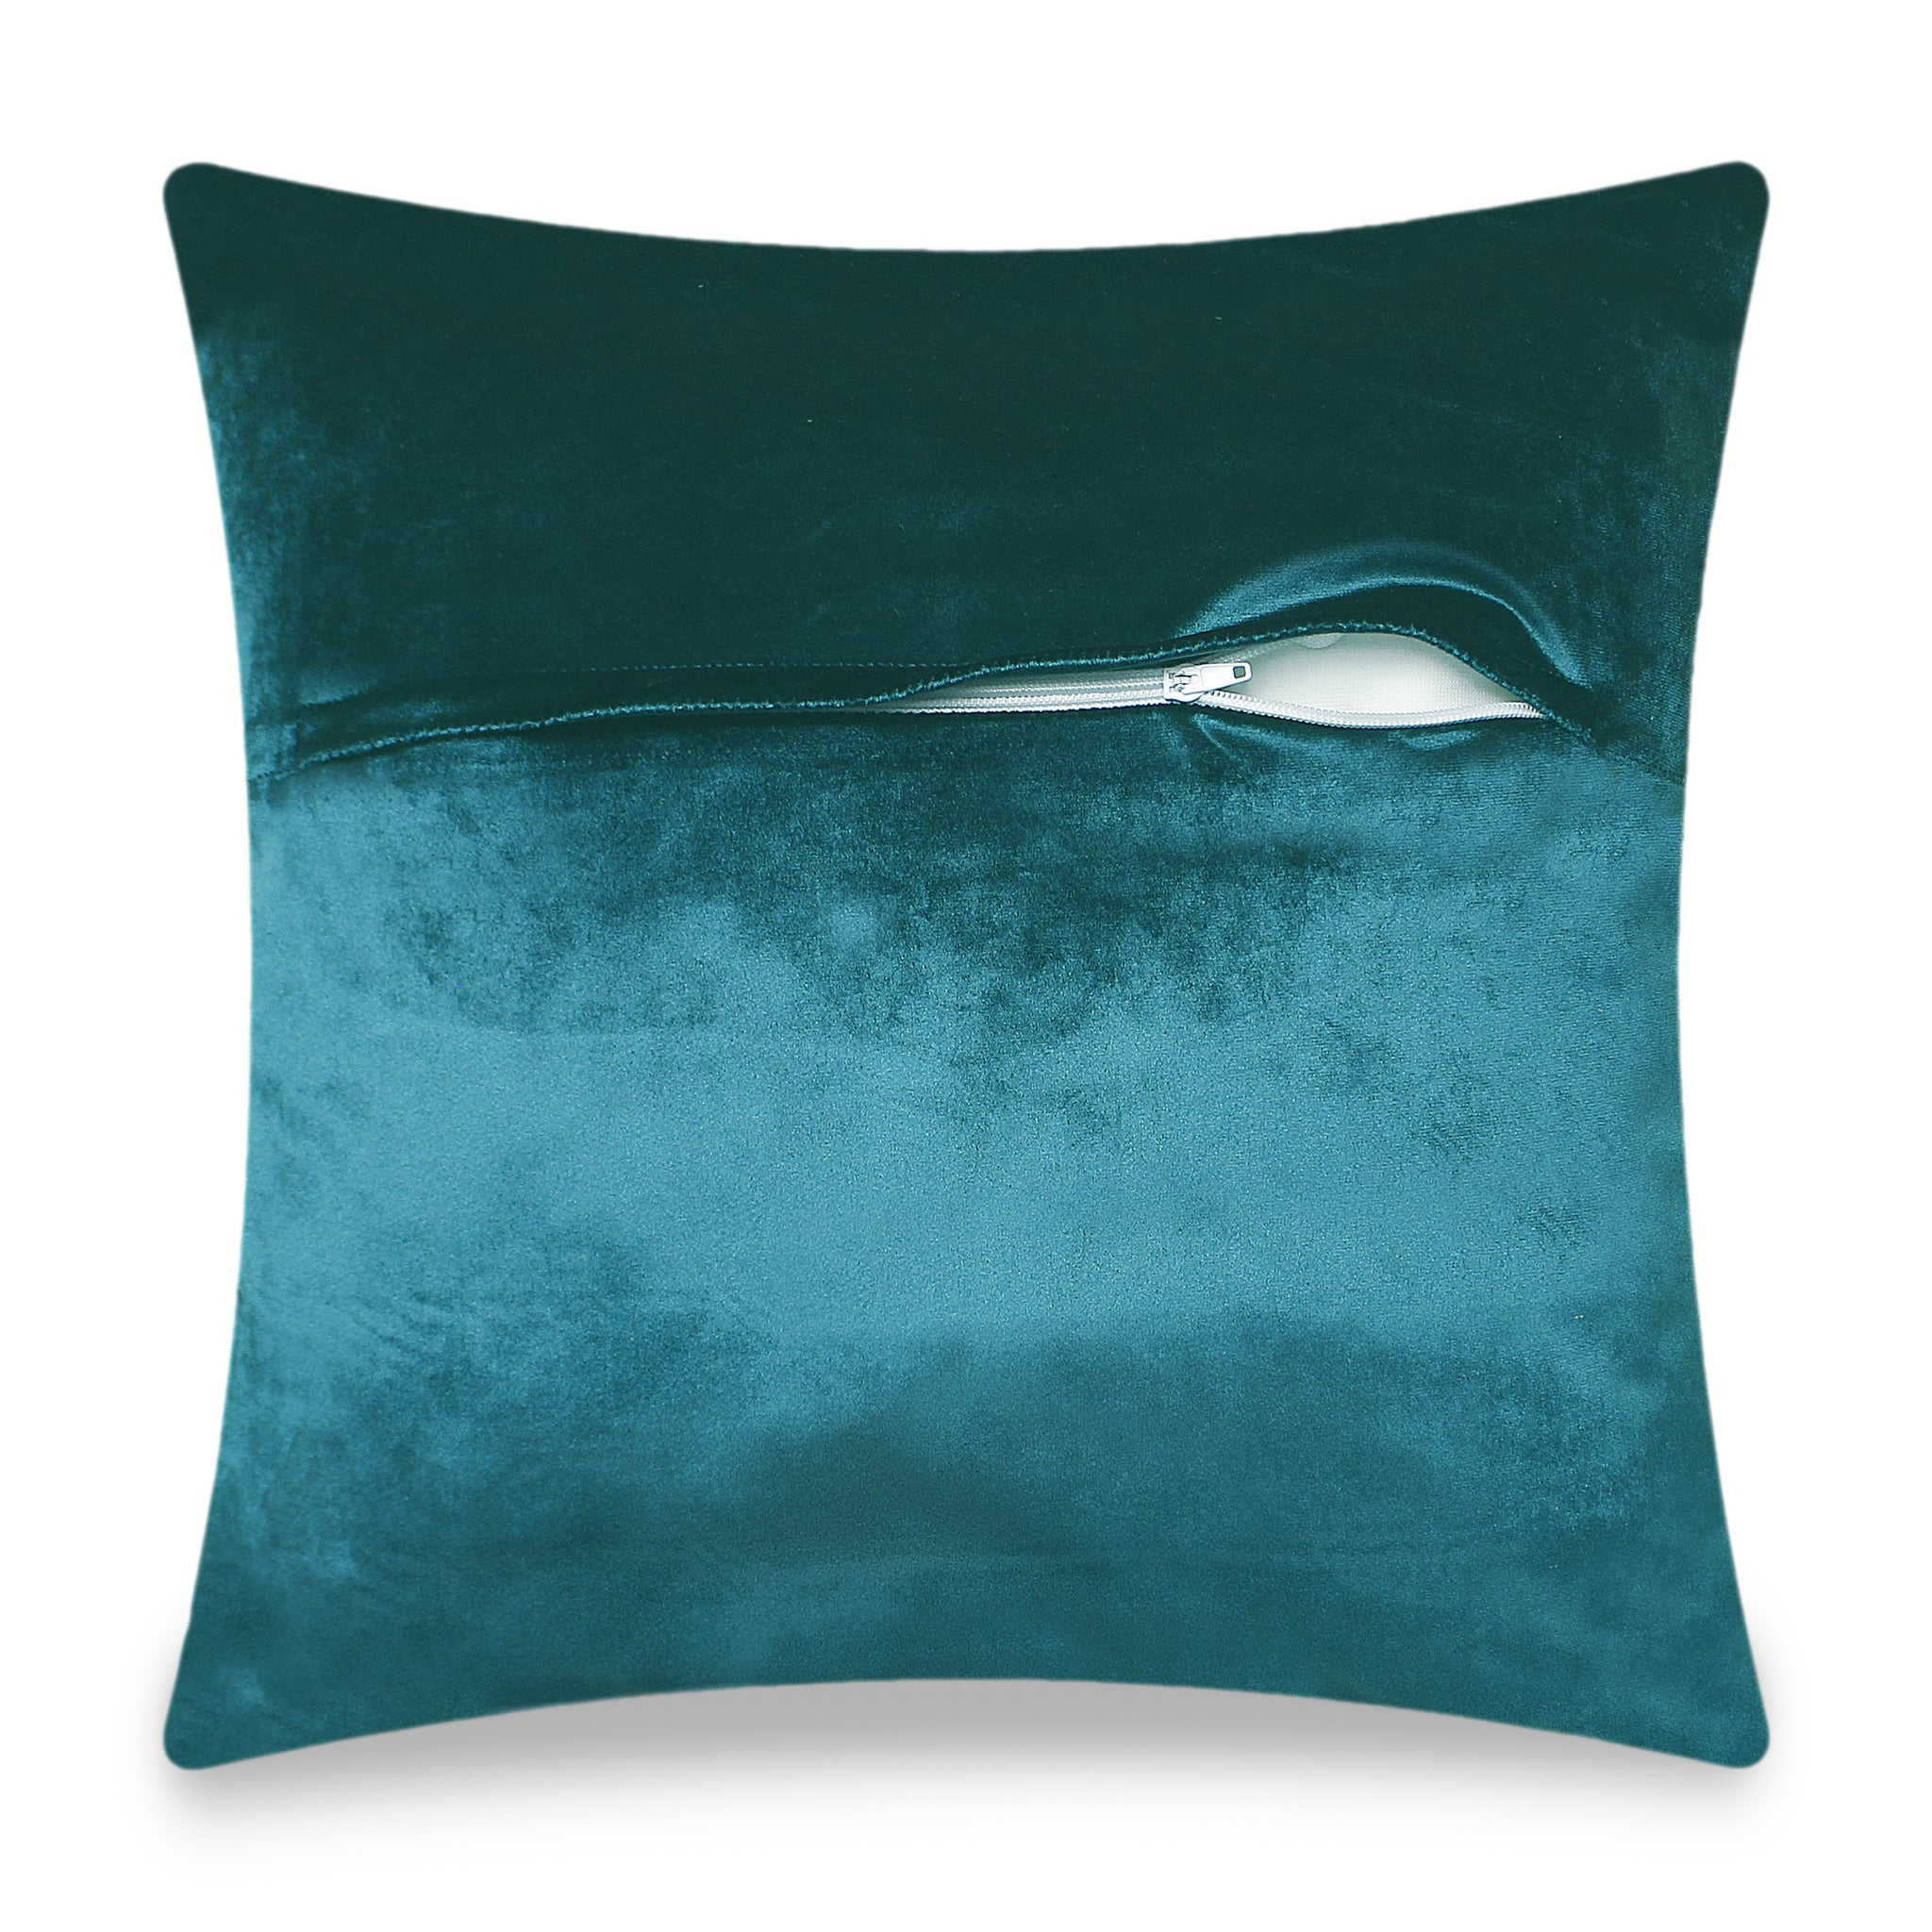  Velvet Cushion Cover Frida Kahlo and Floral Decorative Pillowcase Home Decor Throw Pillow for Sofa Chair 45x45 cm 4